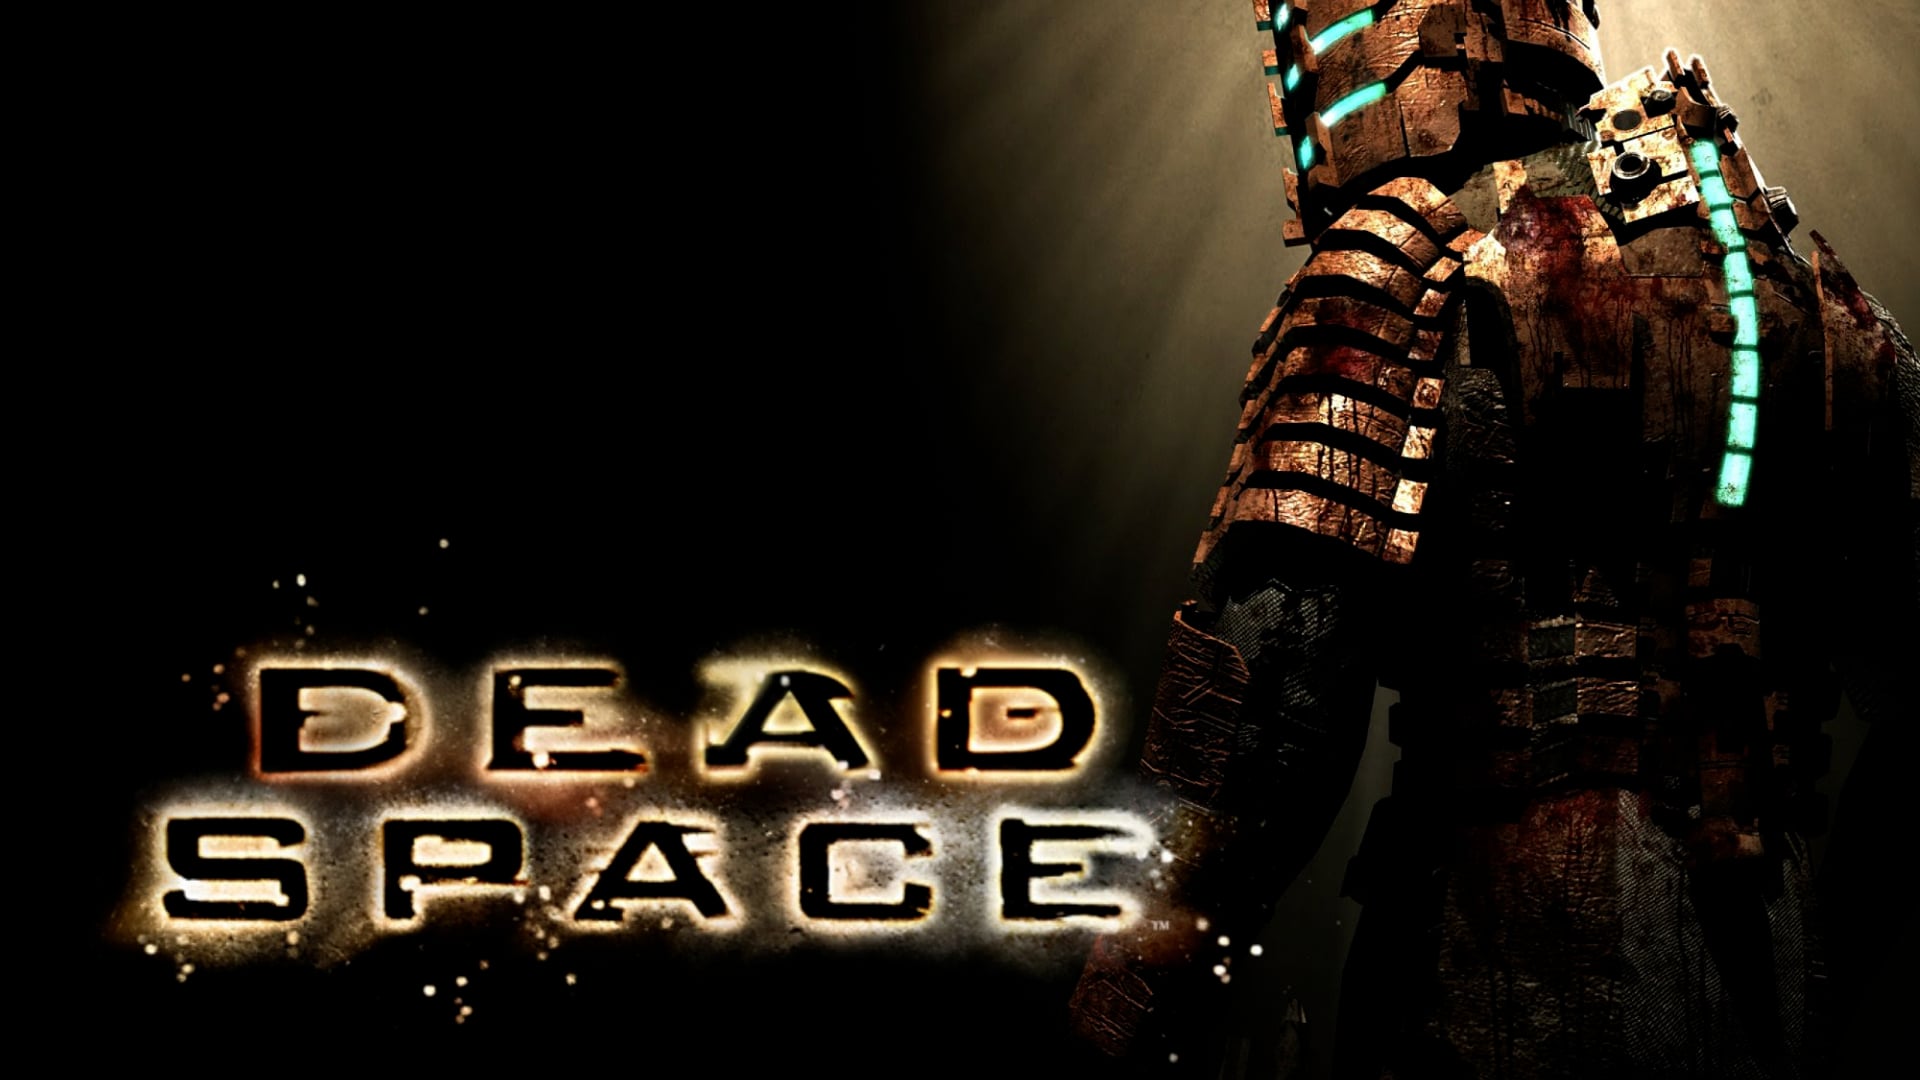 Dead Space - Launch Trailer